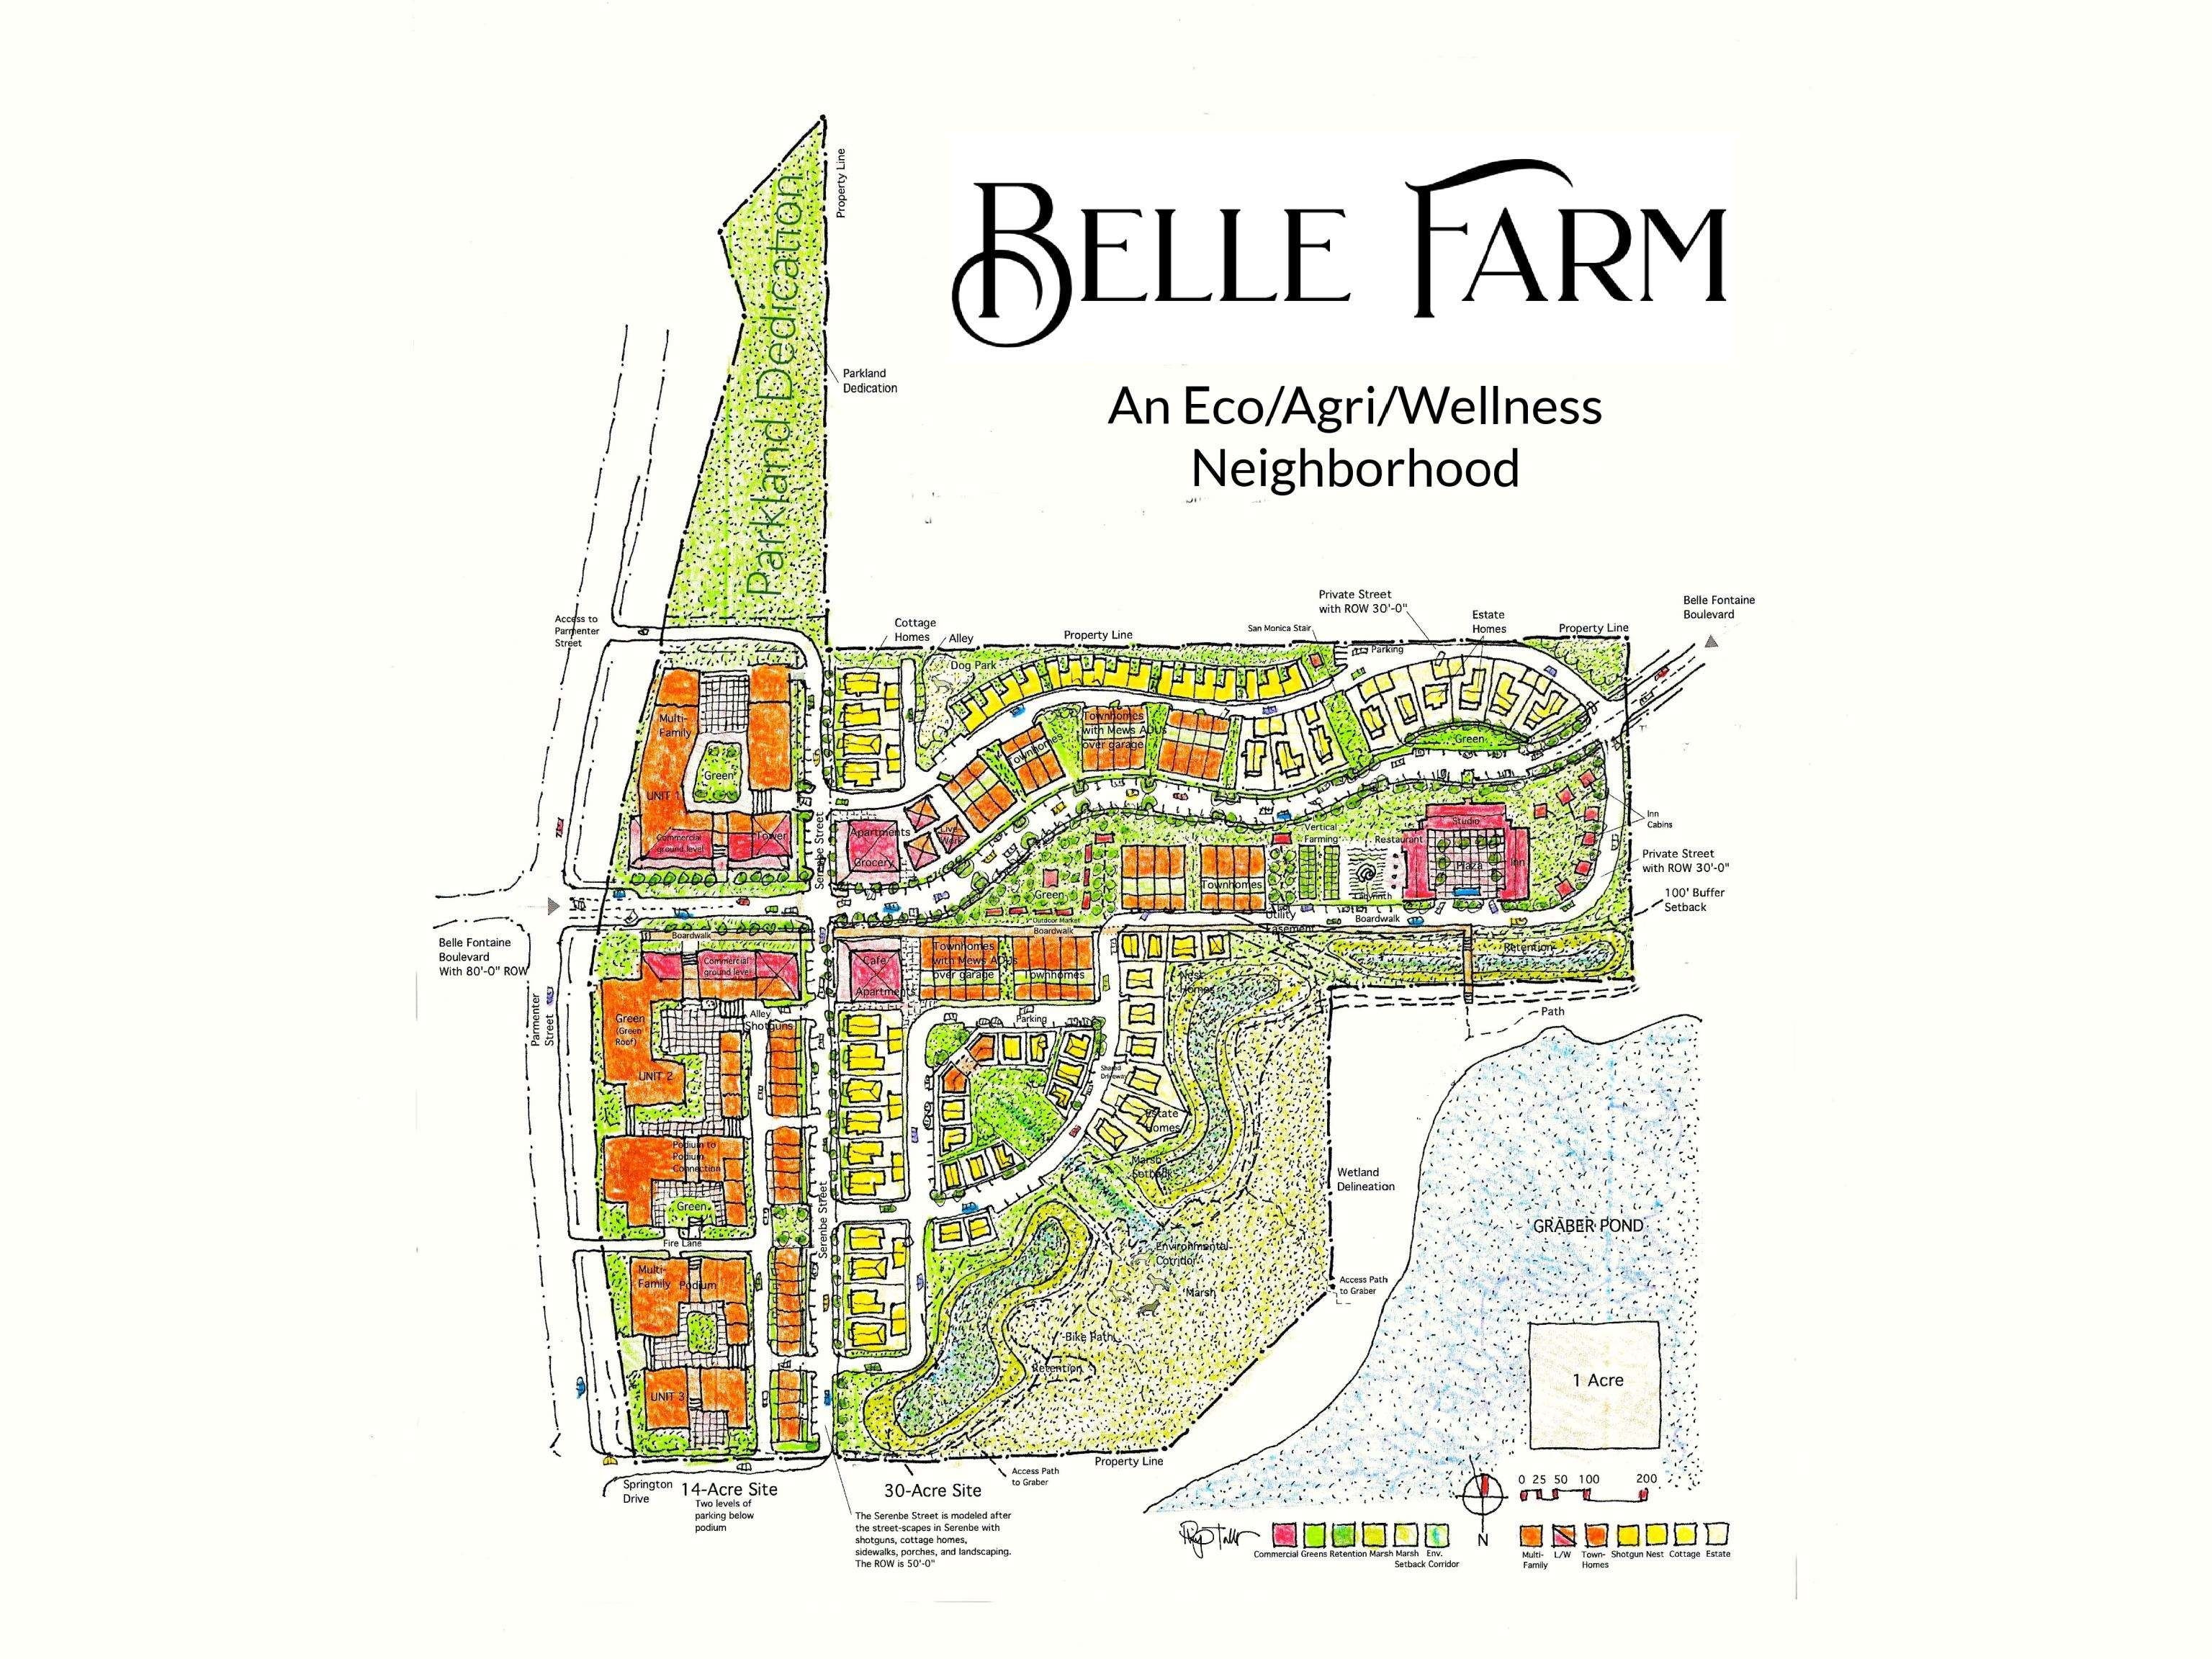 1. Lot 29 Belle Farm